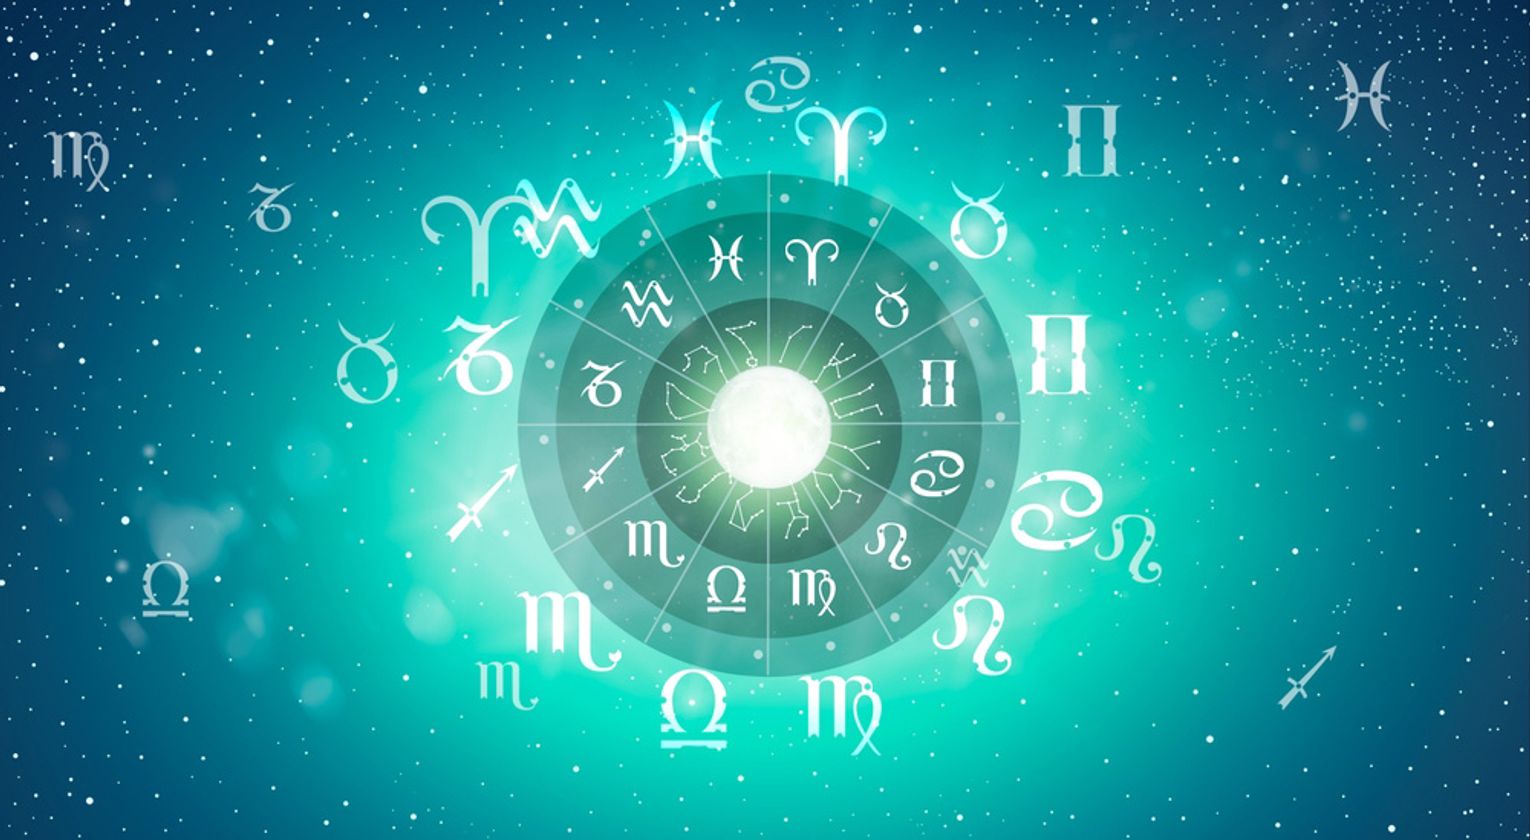 A green horoscope chart